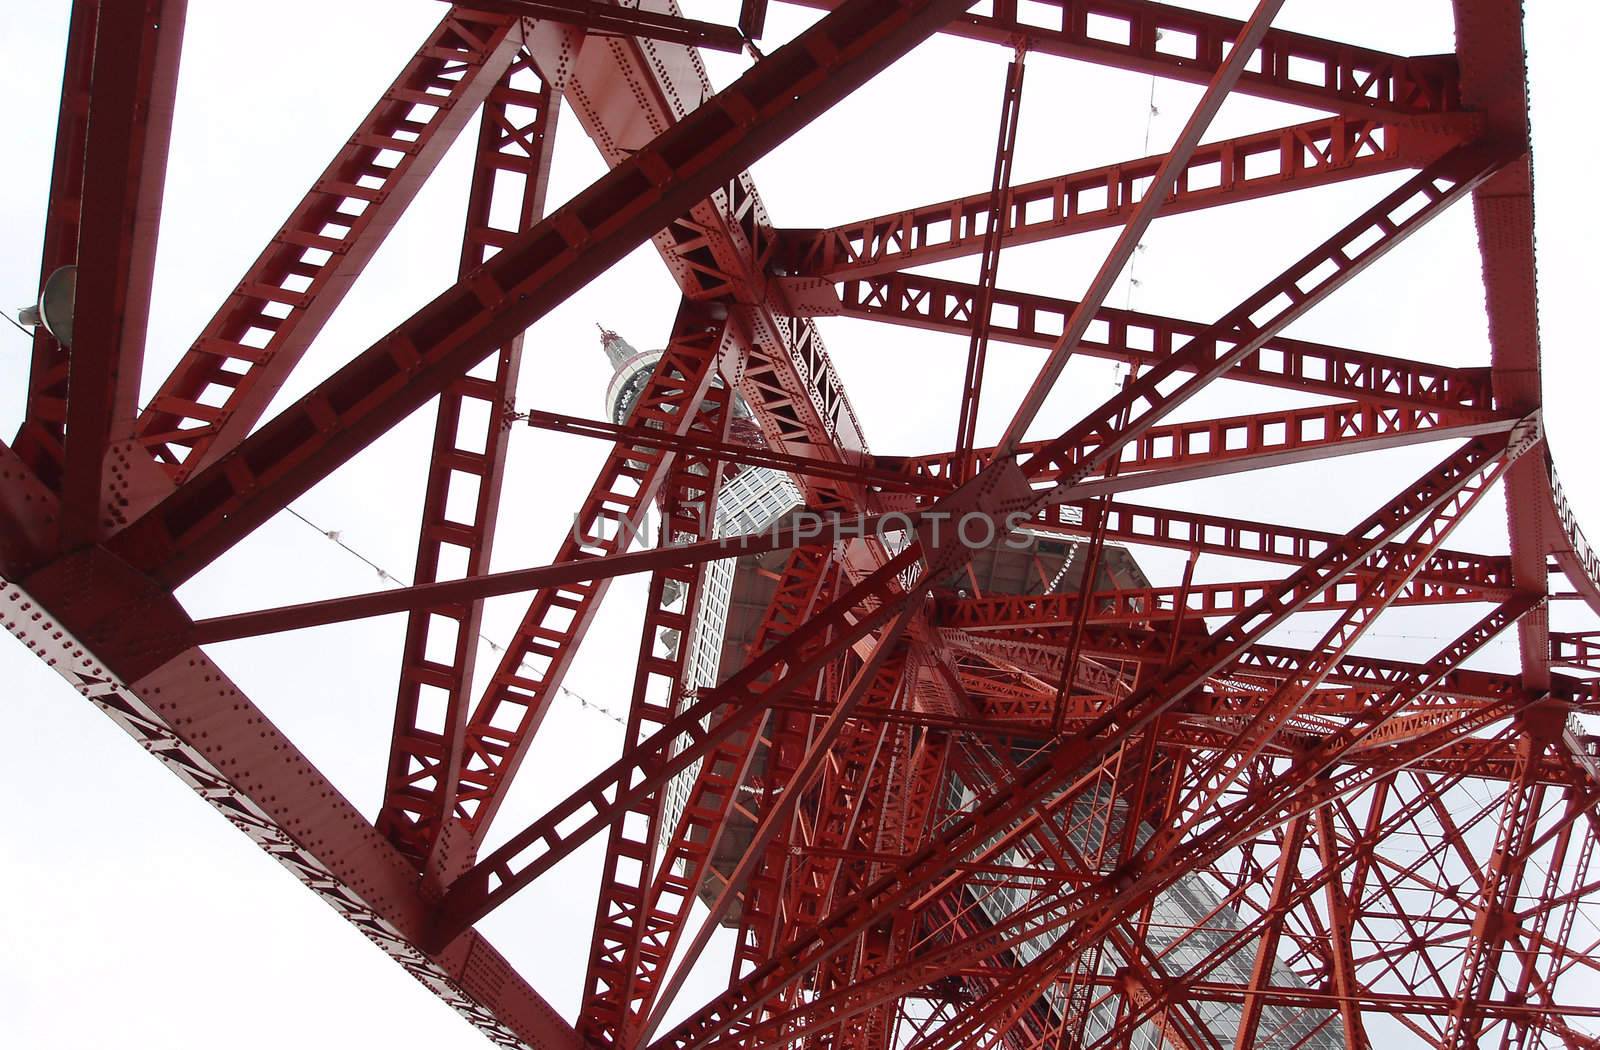 iconic red landmark 'tv tower' in tokyo, japan